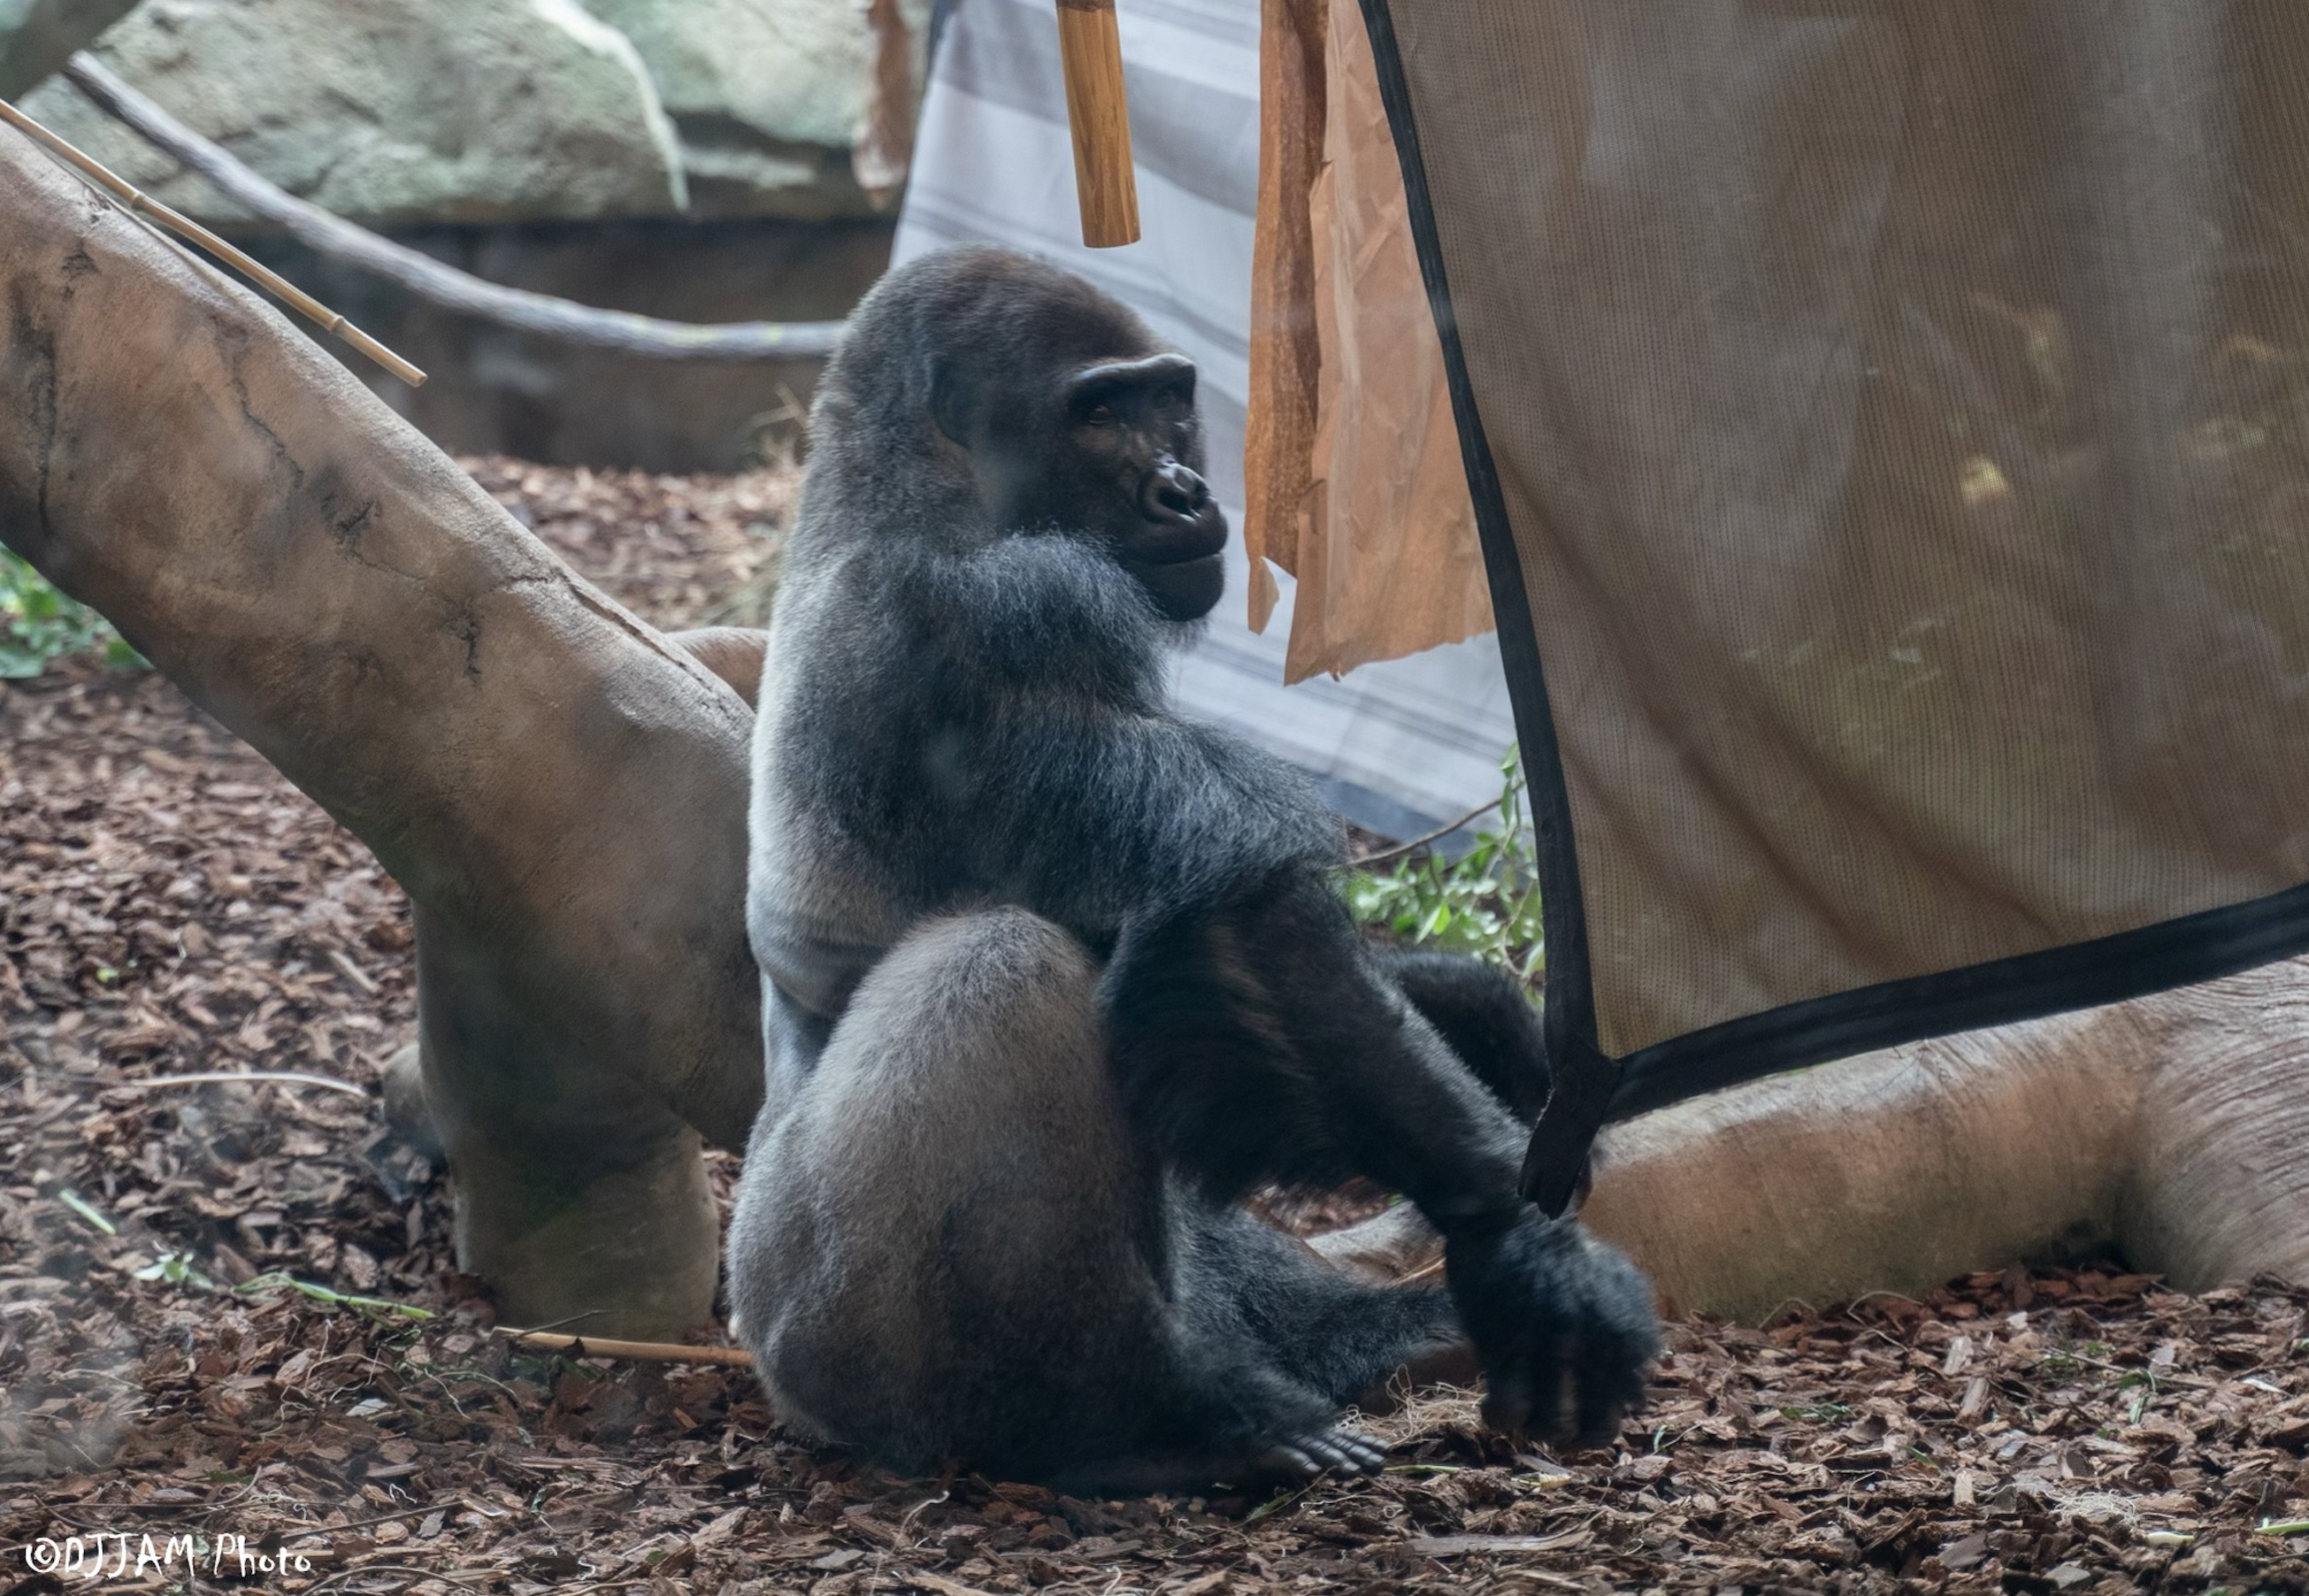 Cincinnati Zoo welcomes three gorillas to Gorilla World